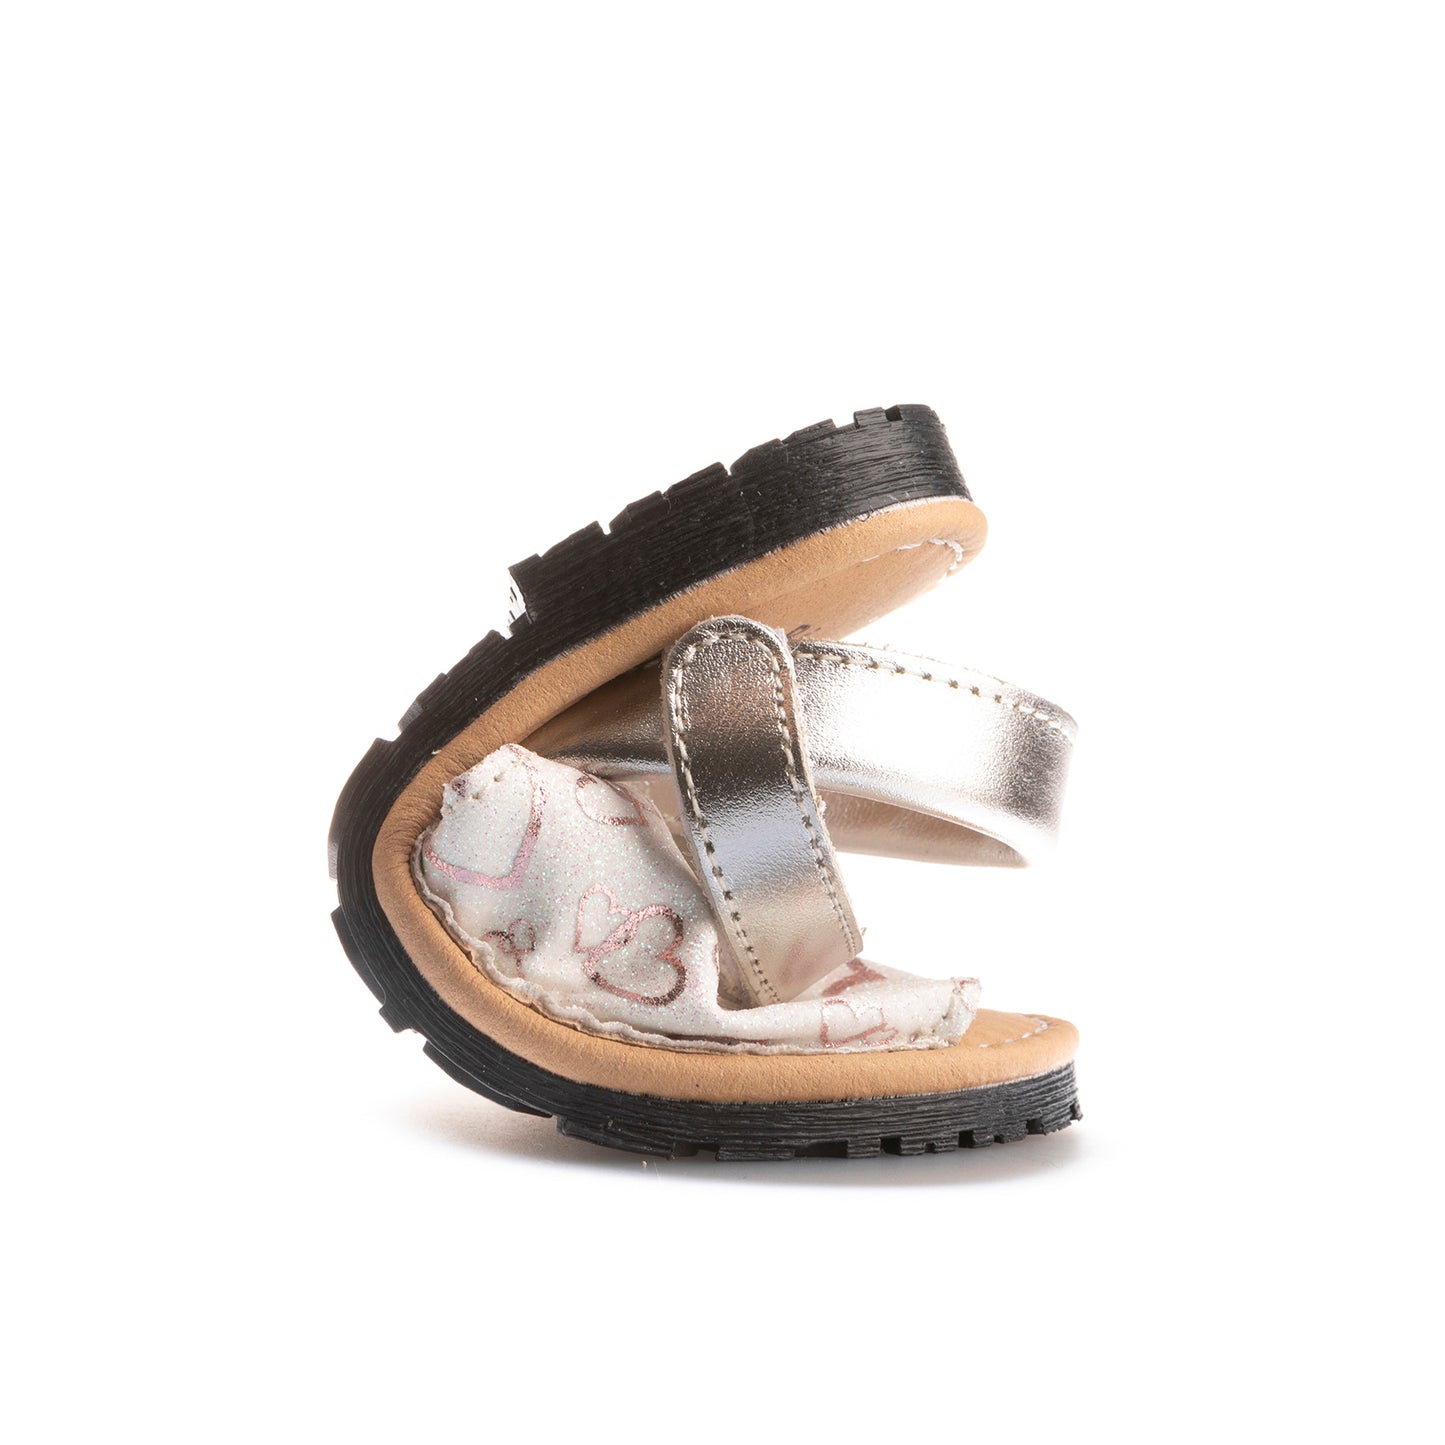 Pablosky Menorquina Sandals / 128380